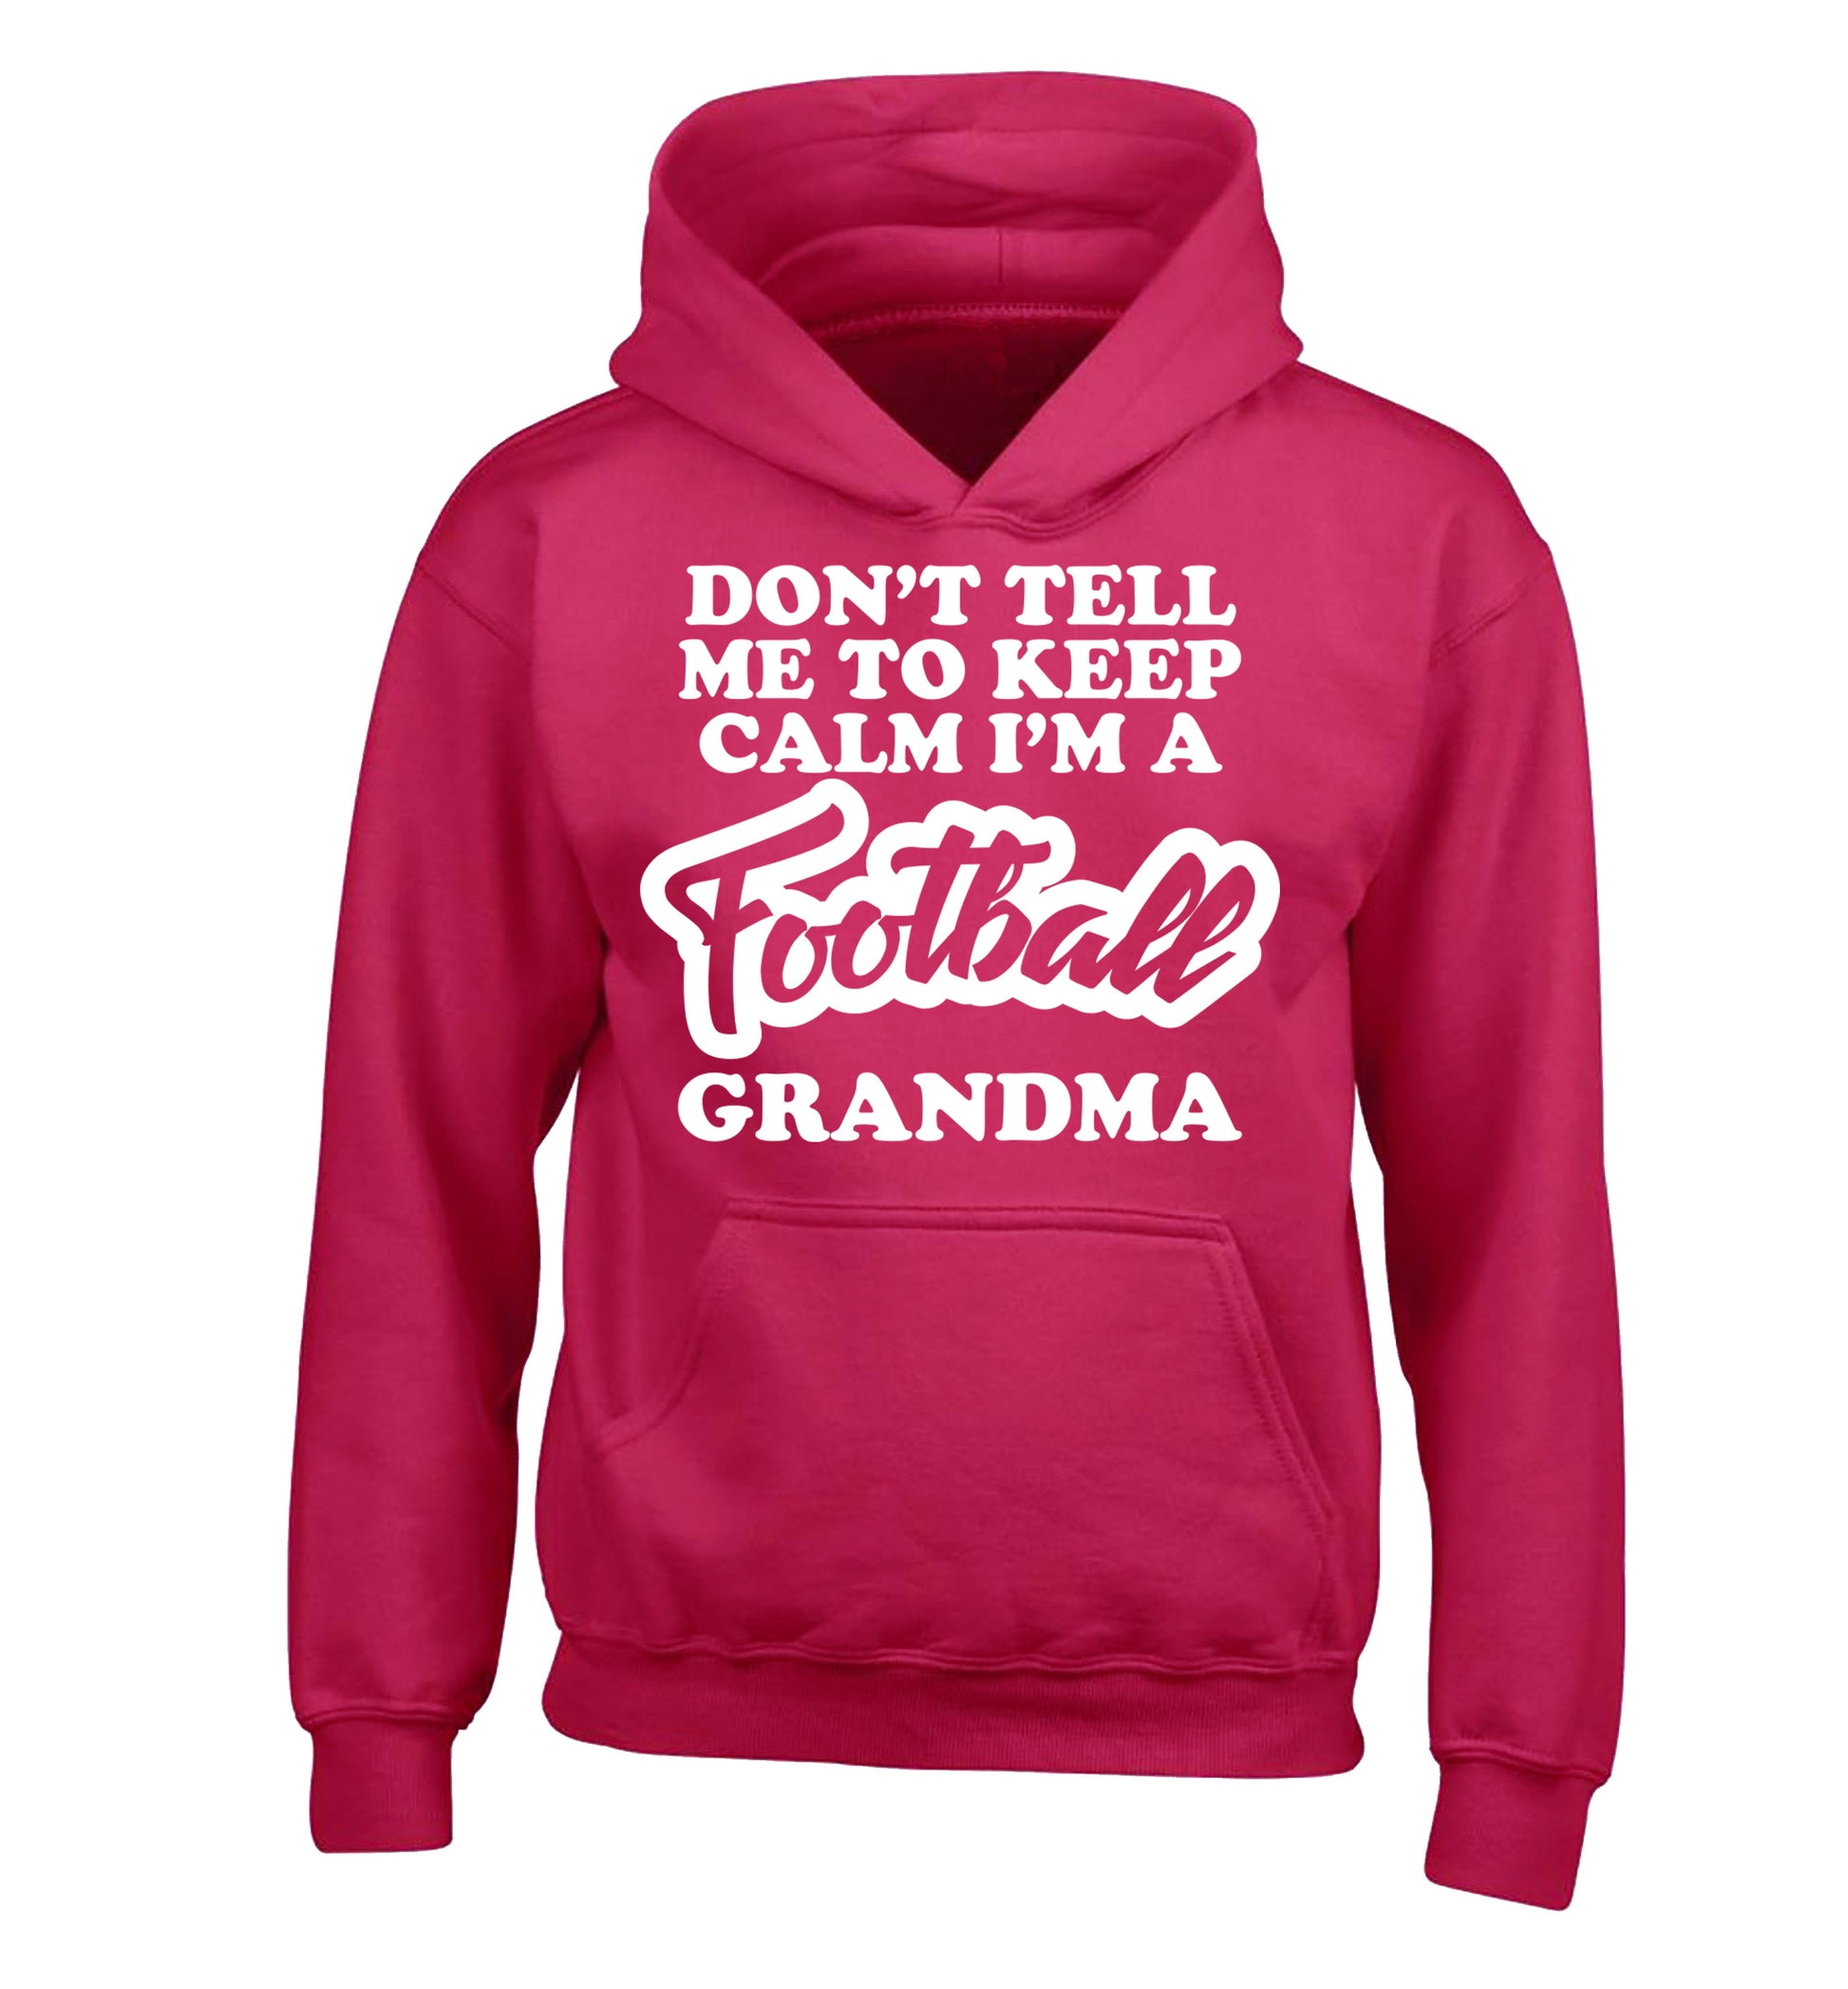 Don't tell me to keep calm I'm a football grandma children's pink hoodie 12-14 Years